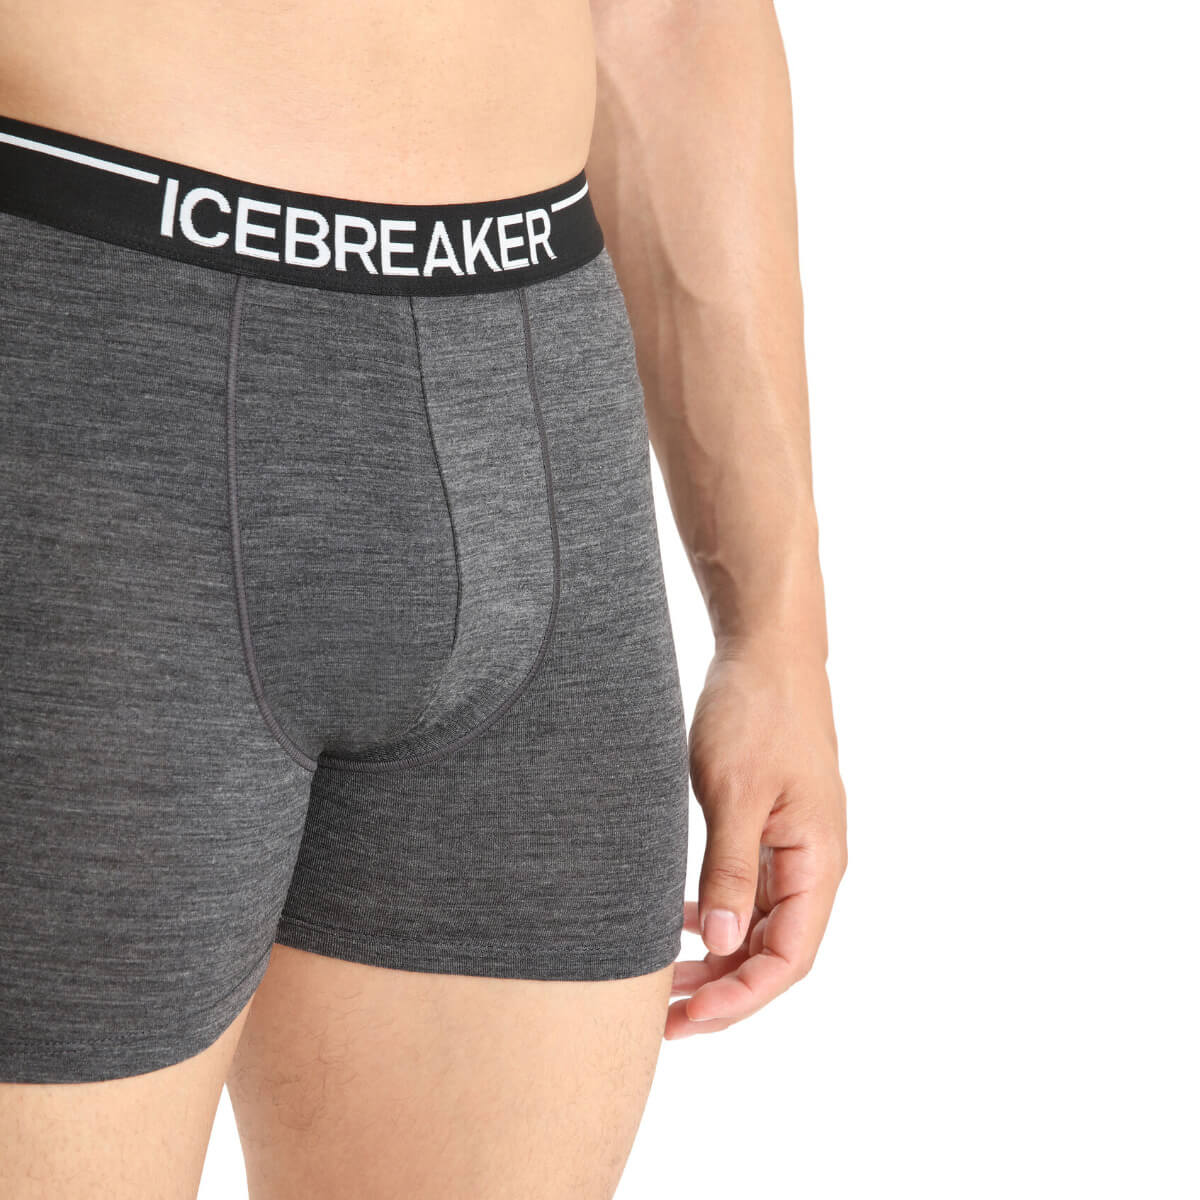 Icebreaker Anatomica Boxers - Men's - Clothing